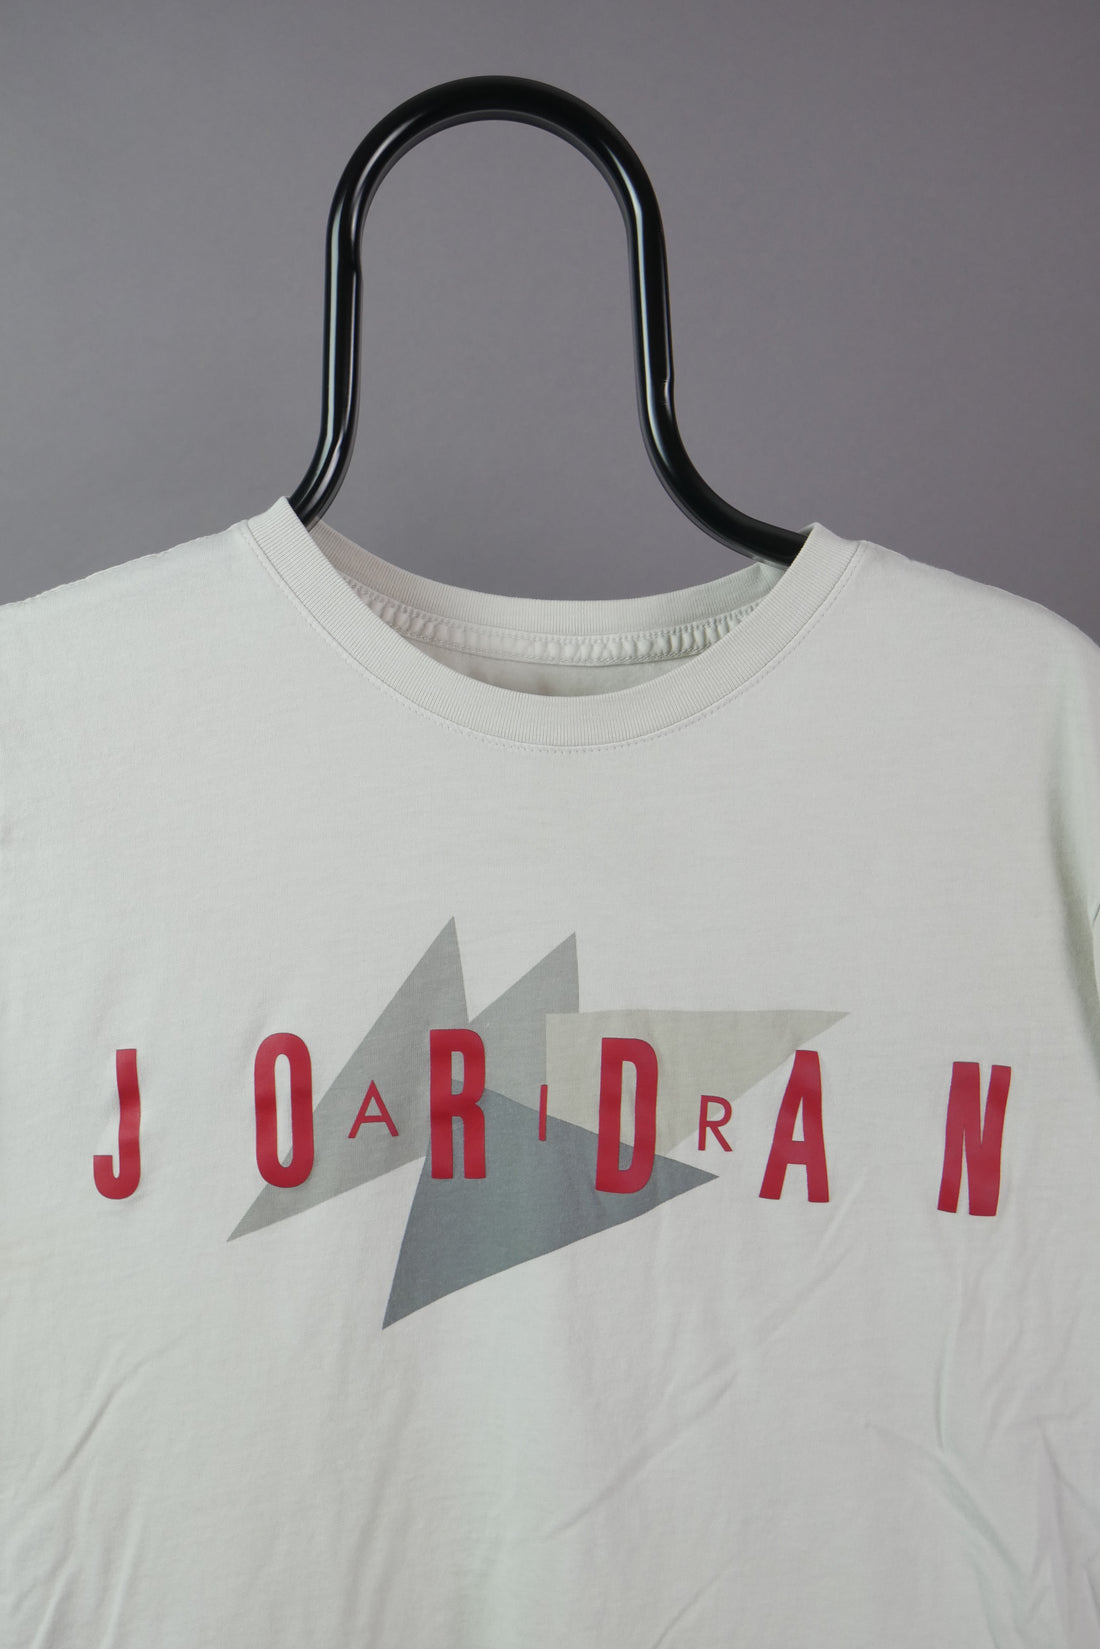 The Nike Jordan Graphic T-Shirt (XL)